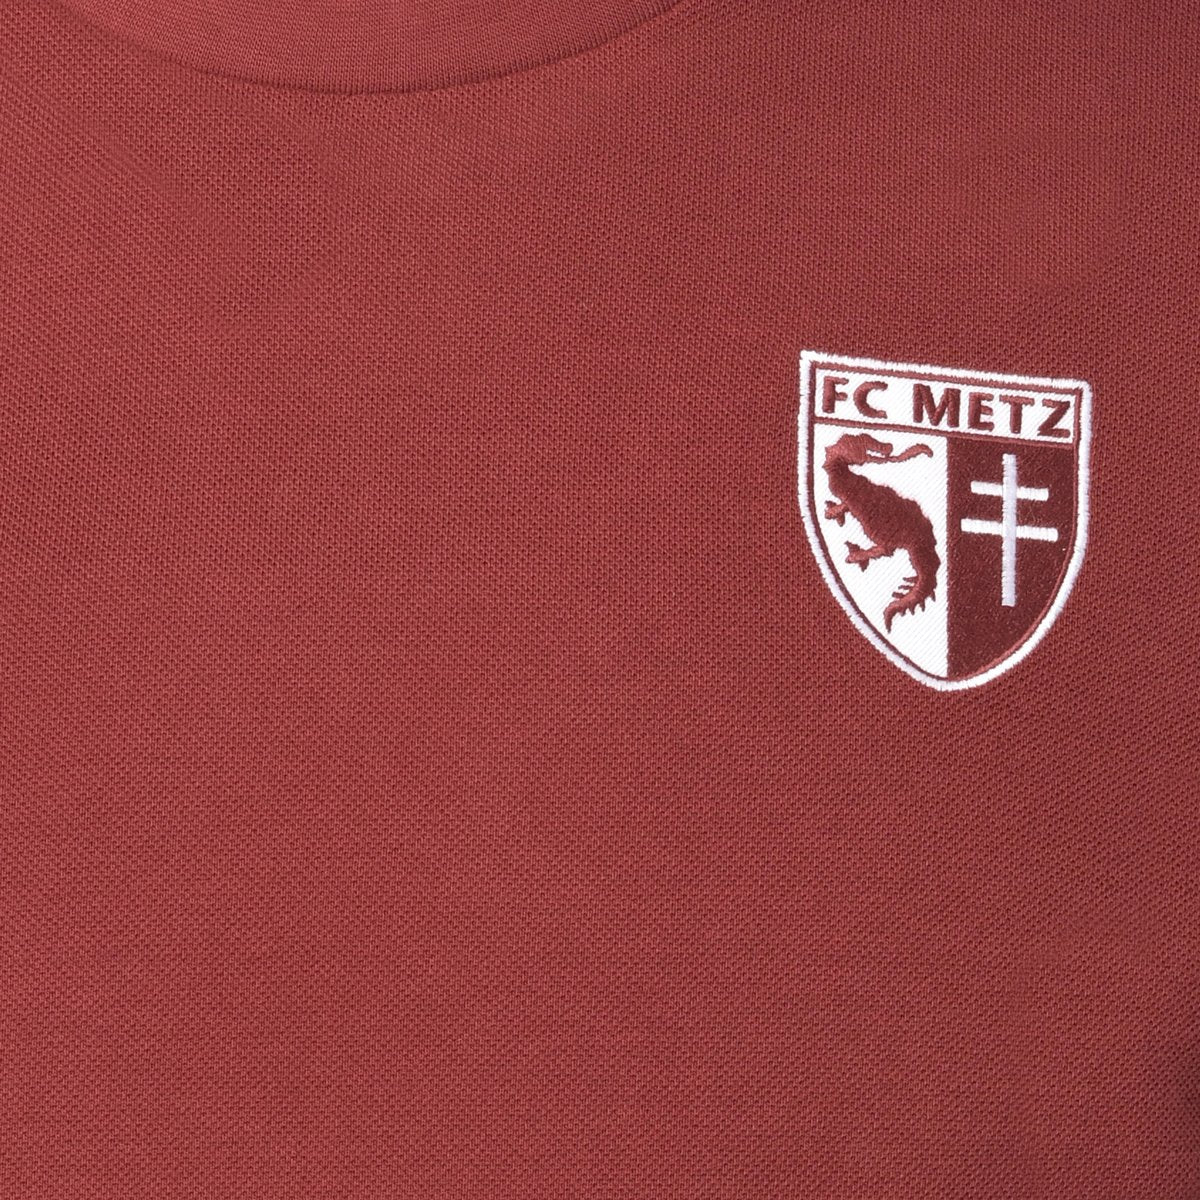 Camiseta Angelico Fc Metz Rojo Hombre - Imagen 3